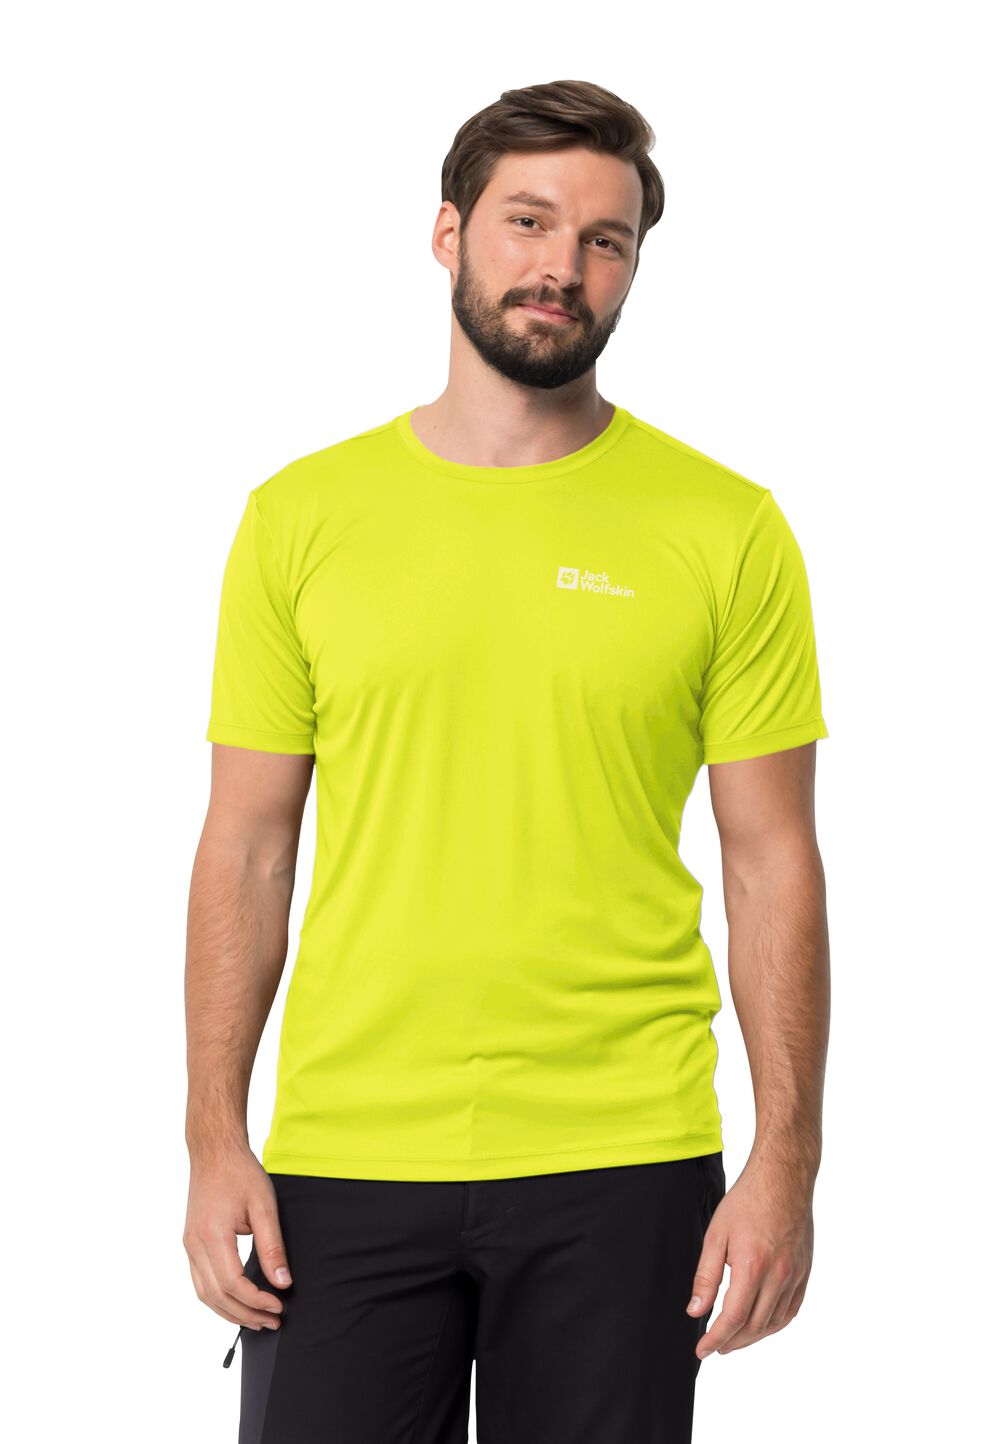 Jack Wolfskin Tech T-Shirt Men Functioneel shirt Heren XXL oranje firefly